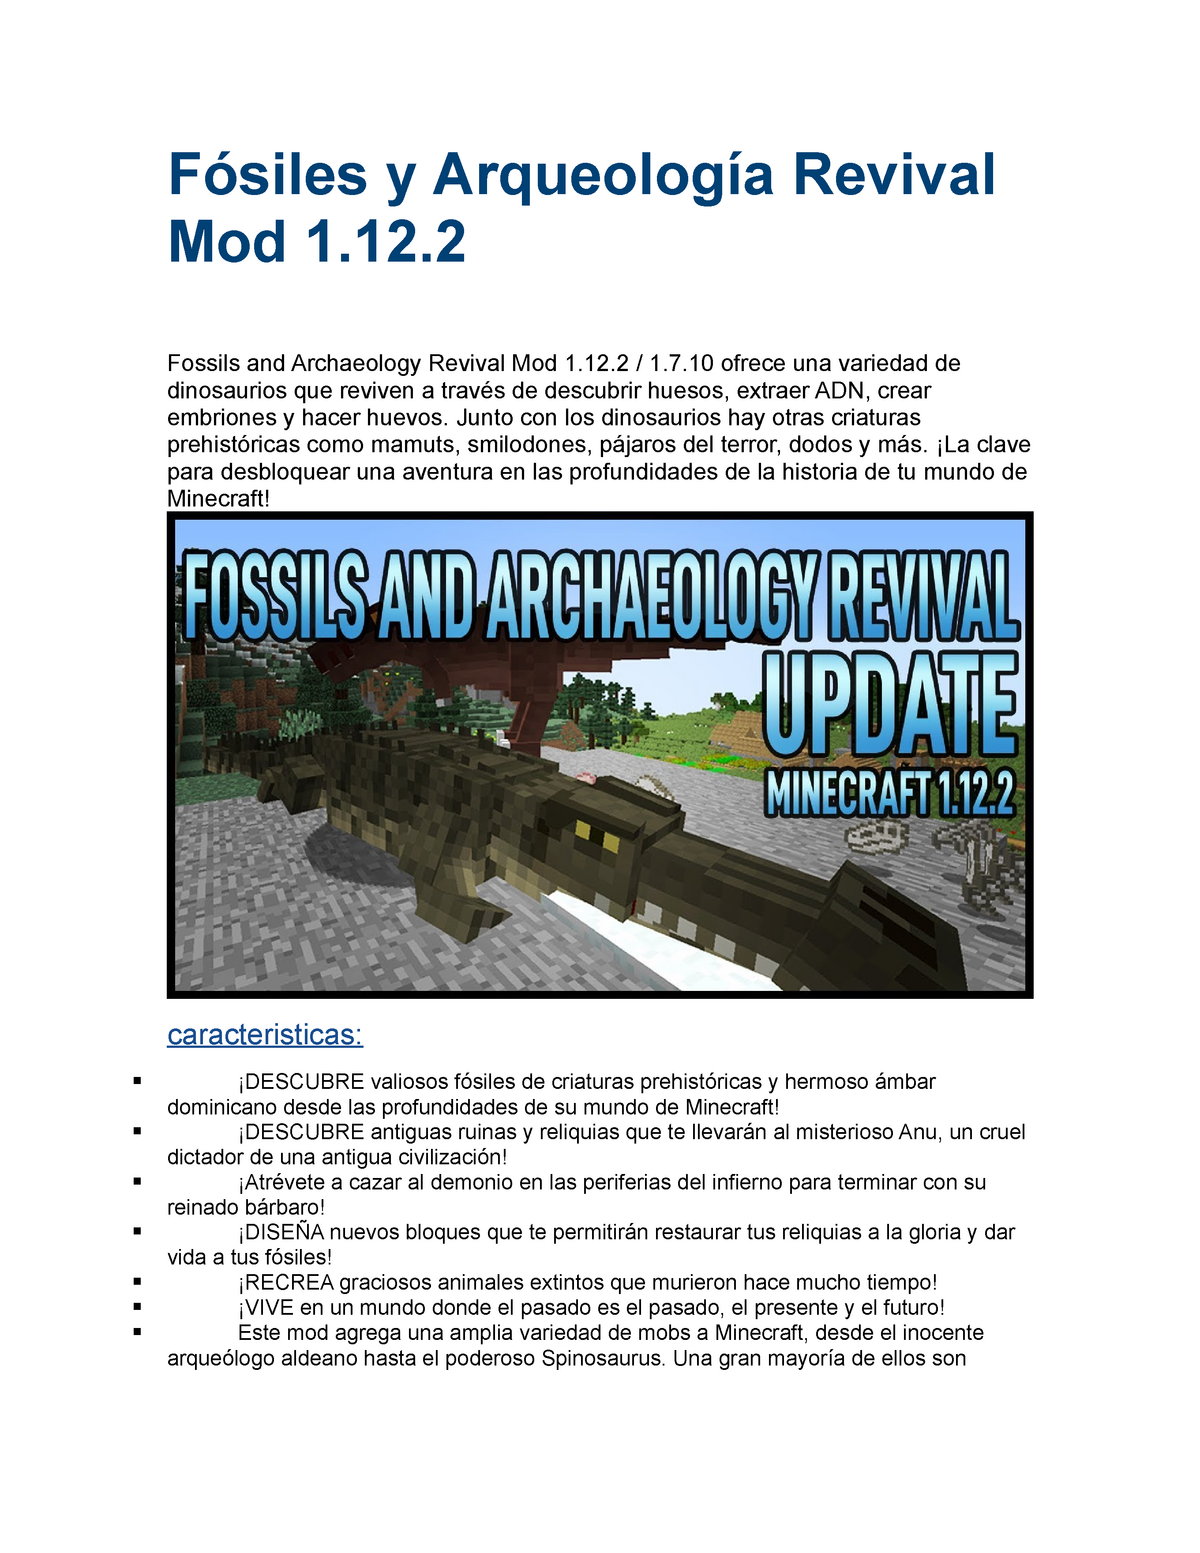 Fósiles y Arqueología Revival Mod 1 - y Revival Mod  Fossils and  Archaeology Revival Mod  - Studocu